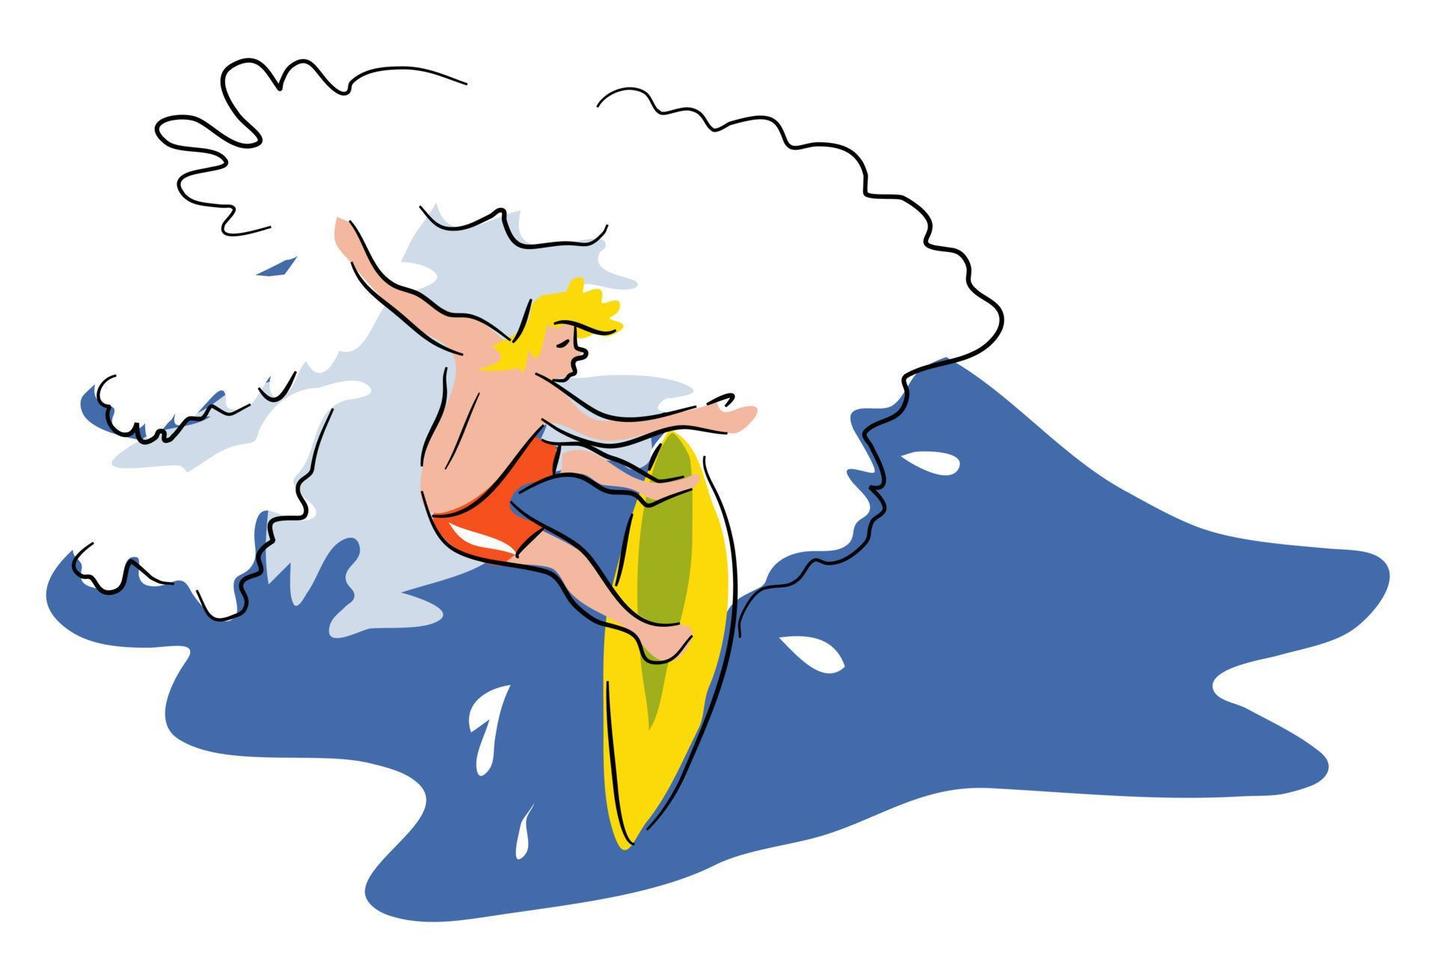 enkel doodle av en blond surfare som rider på en våg av havet vektor